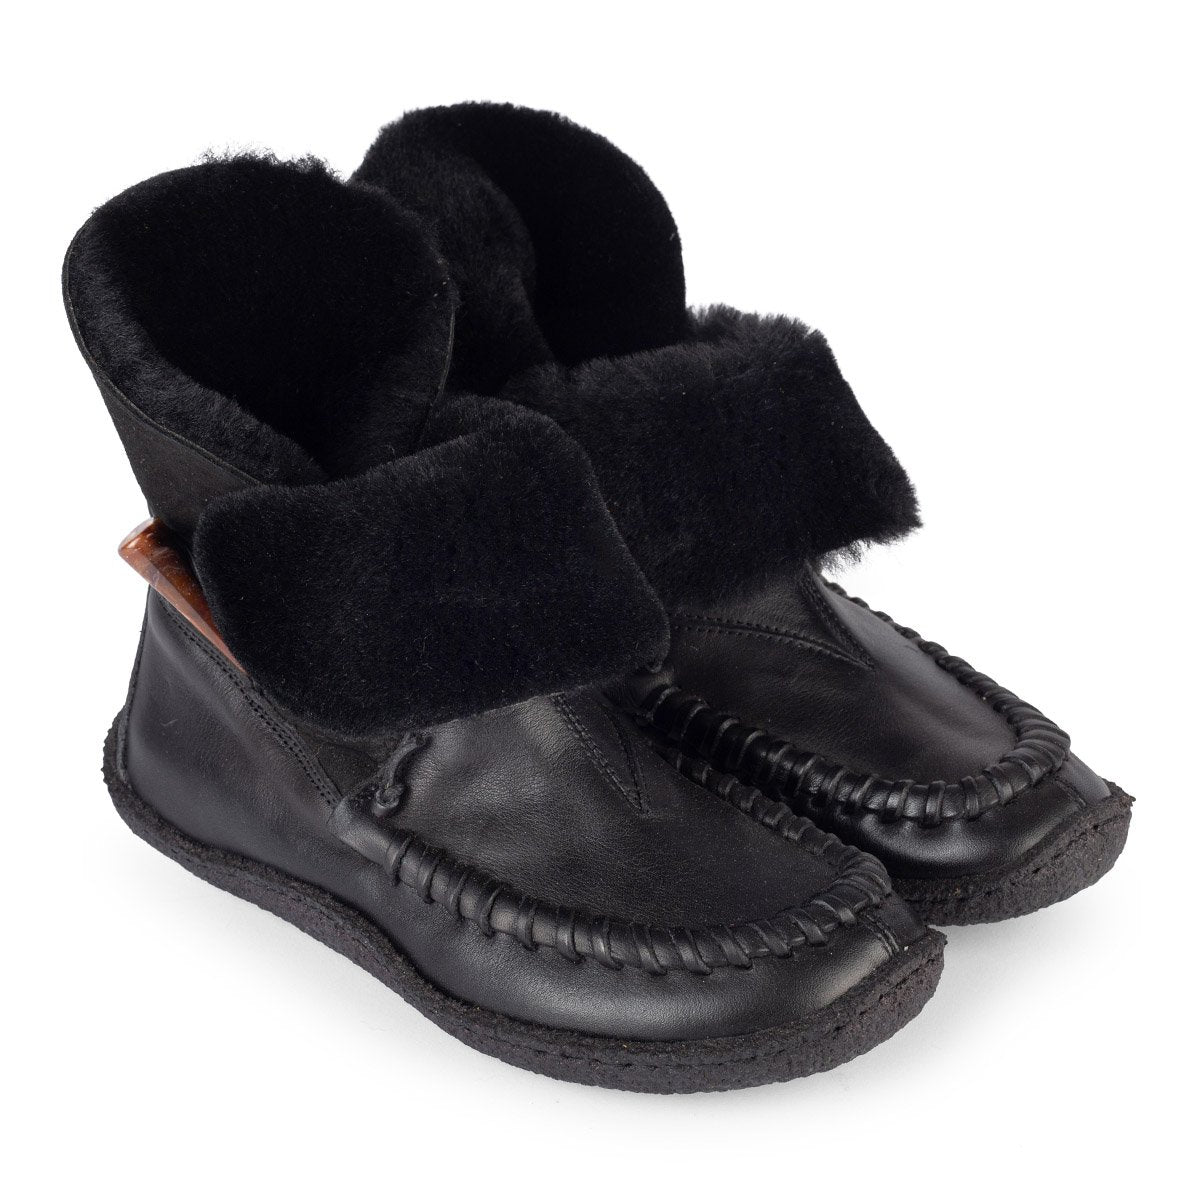 Orso Black – Slip-on boots